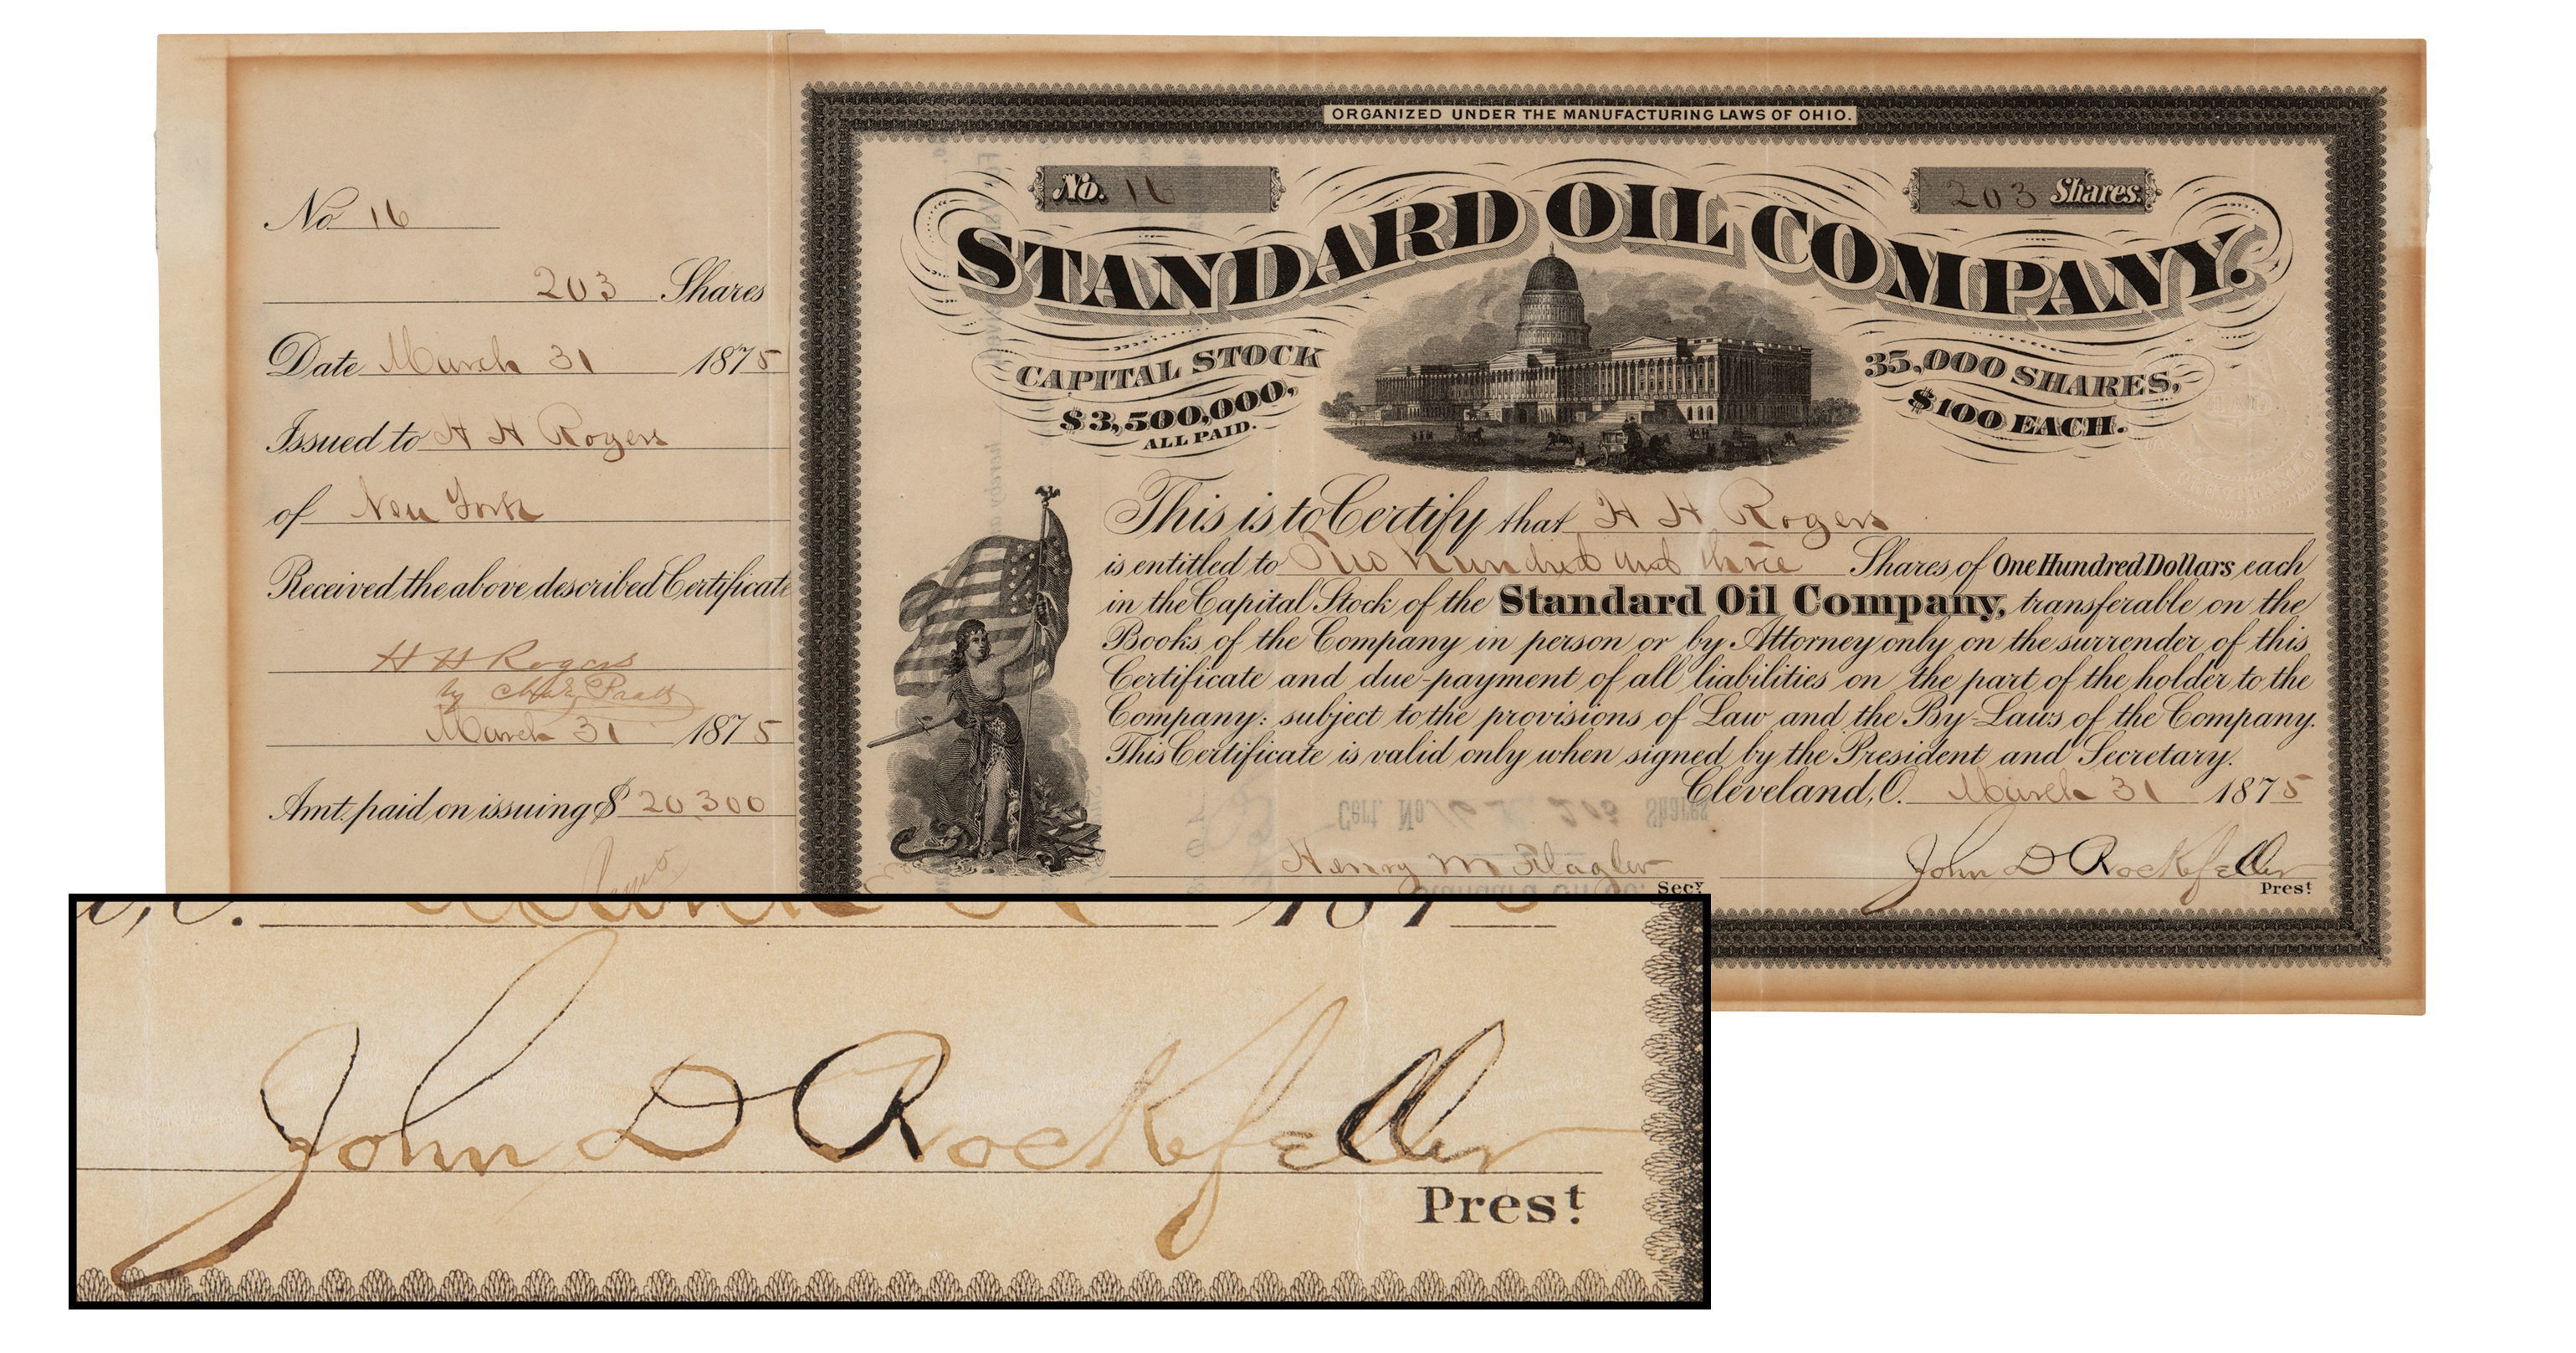 Lot #174 John D. Rockefeller and Henry M. Flagler Signed Standard Oil Stock Certificate Issued to a Senior Executive - Image 1